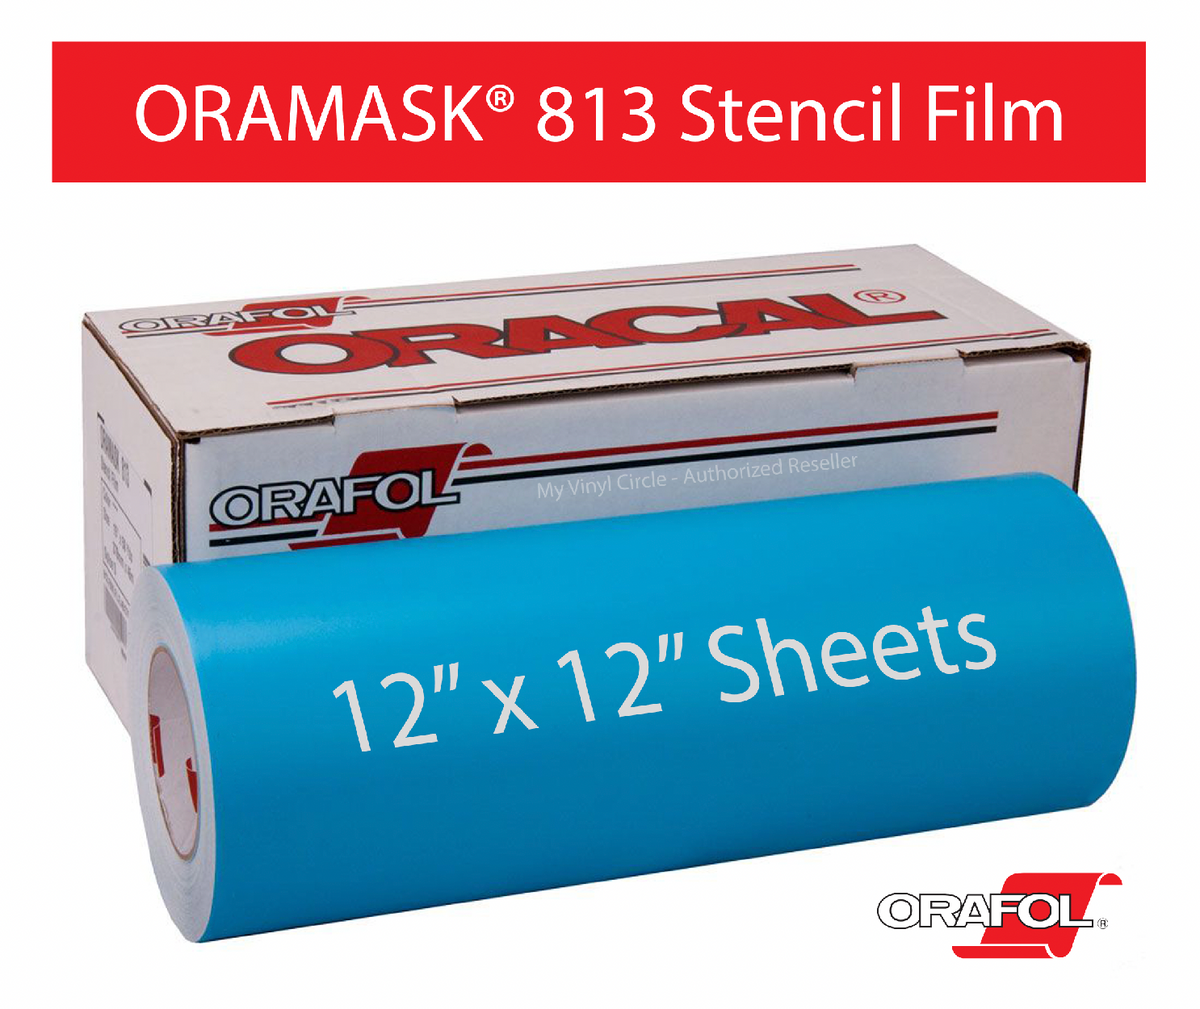 Oracal Oramask 813 Stencil Film – MyVinylCircle